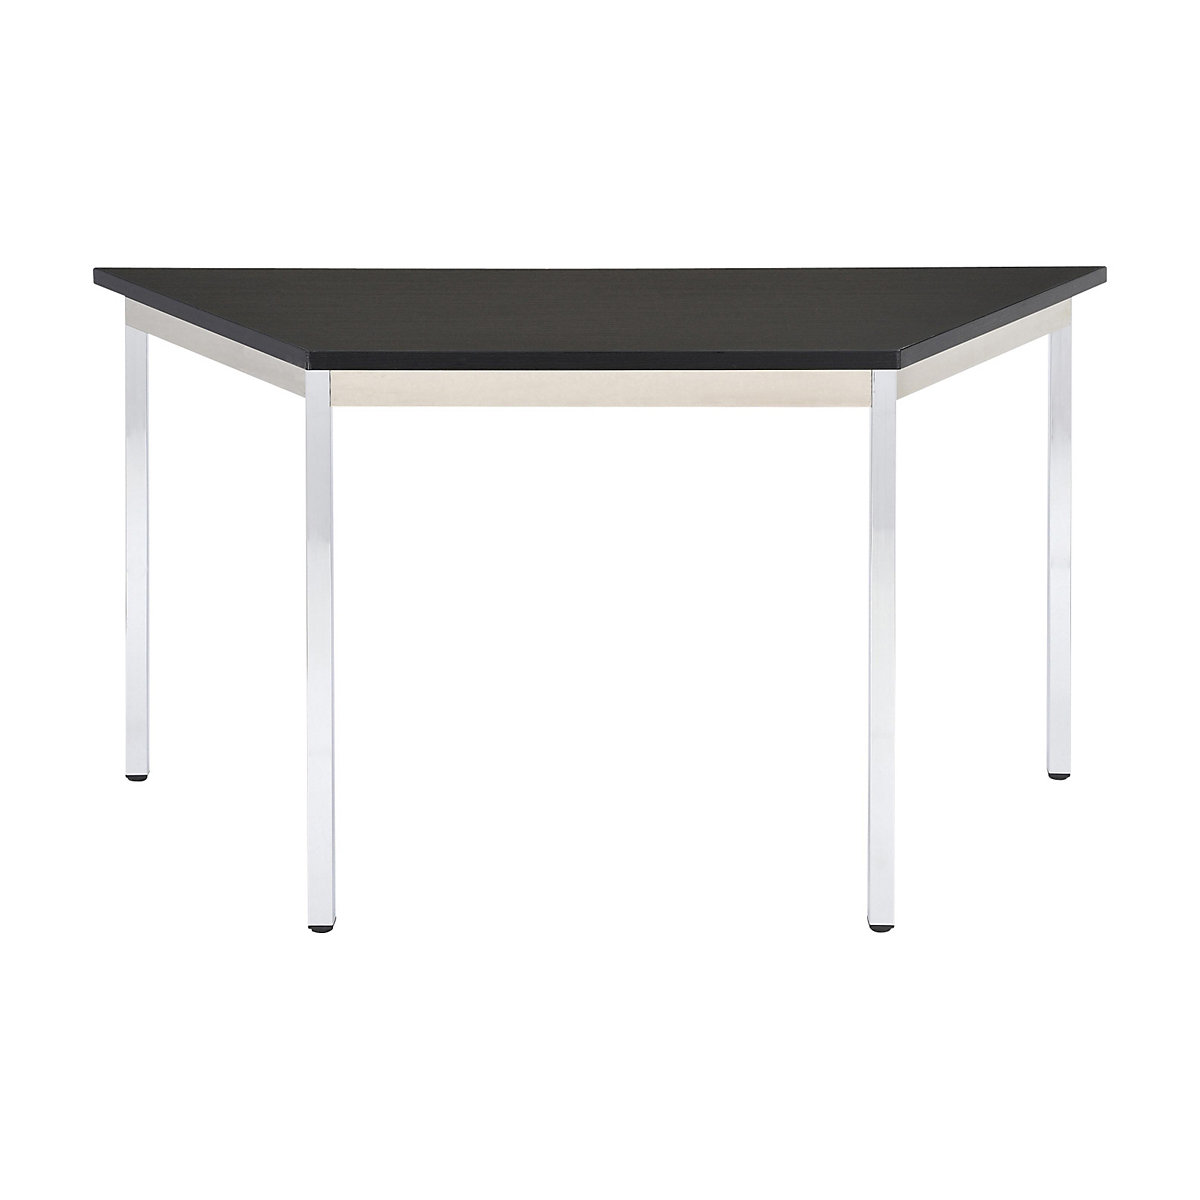 Table polyvalente – eurokraft basic, trapézoïdal, h x l x p 740 x 1200 x 600 mm, plateau noir, piétement chromé-14